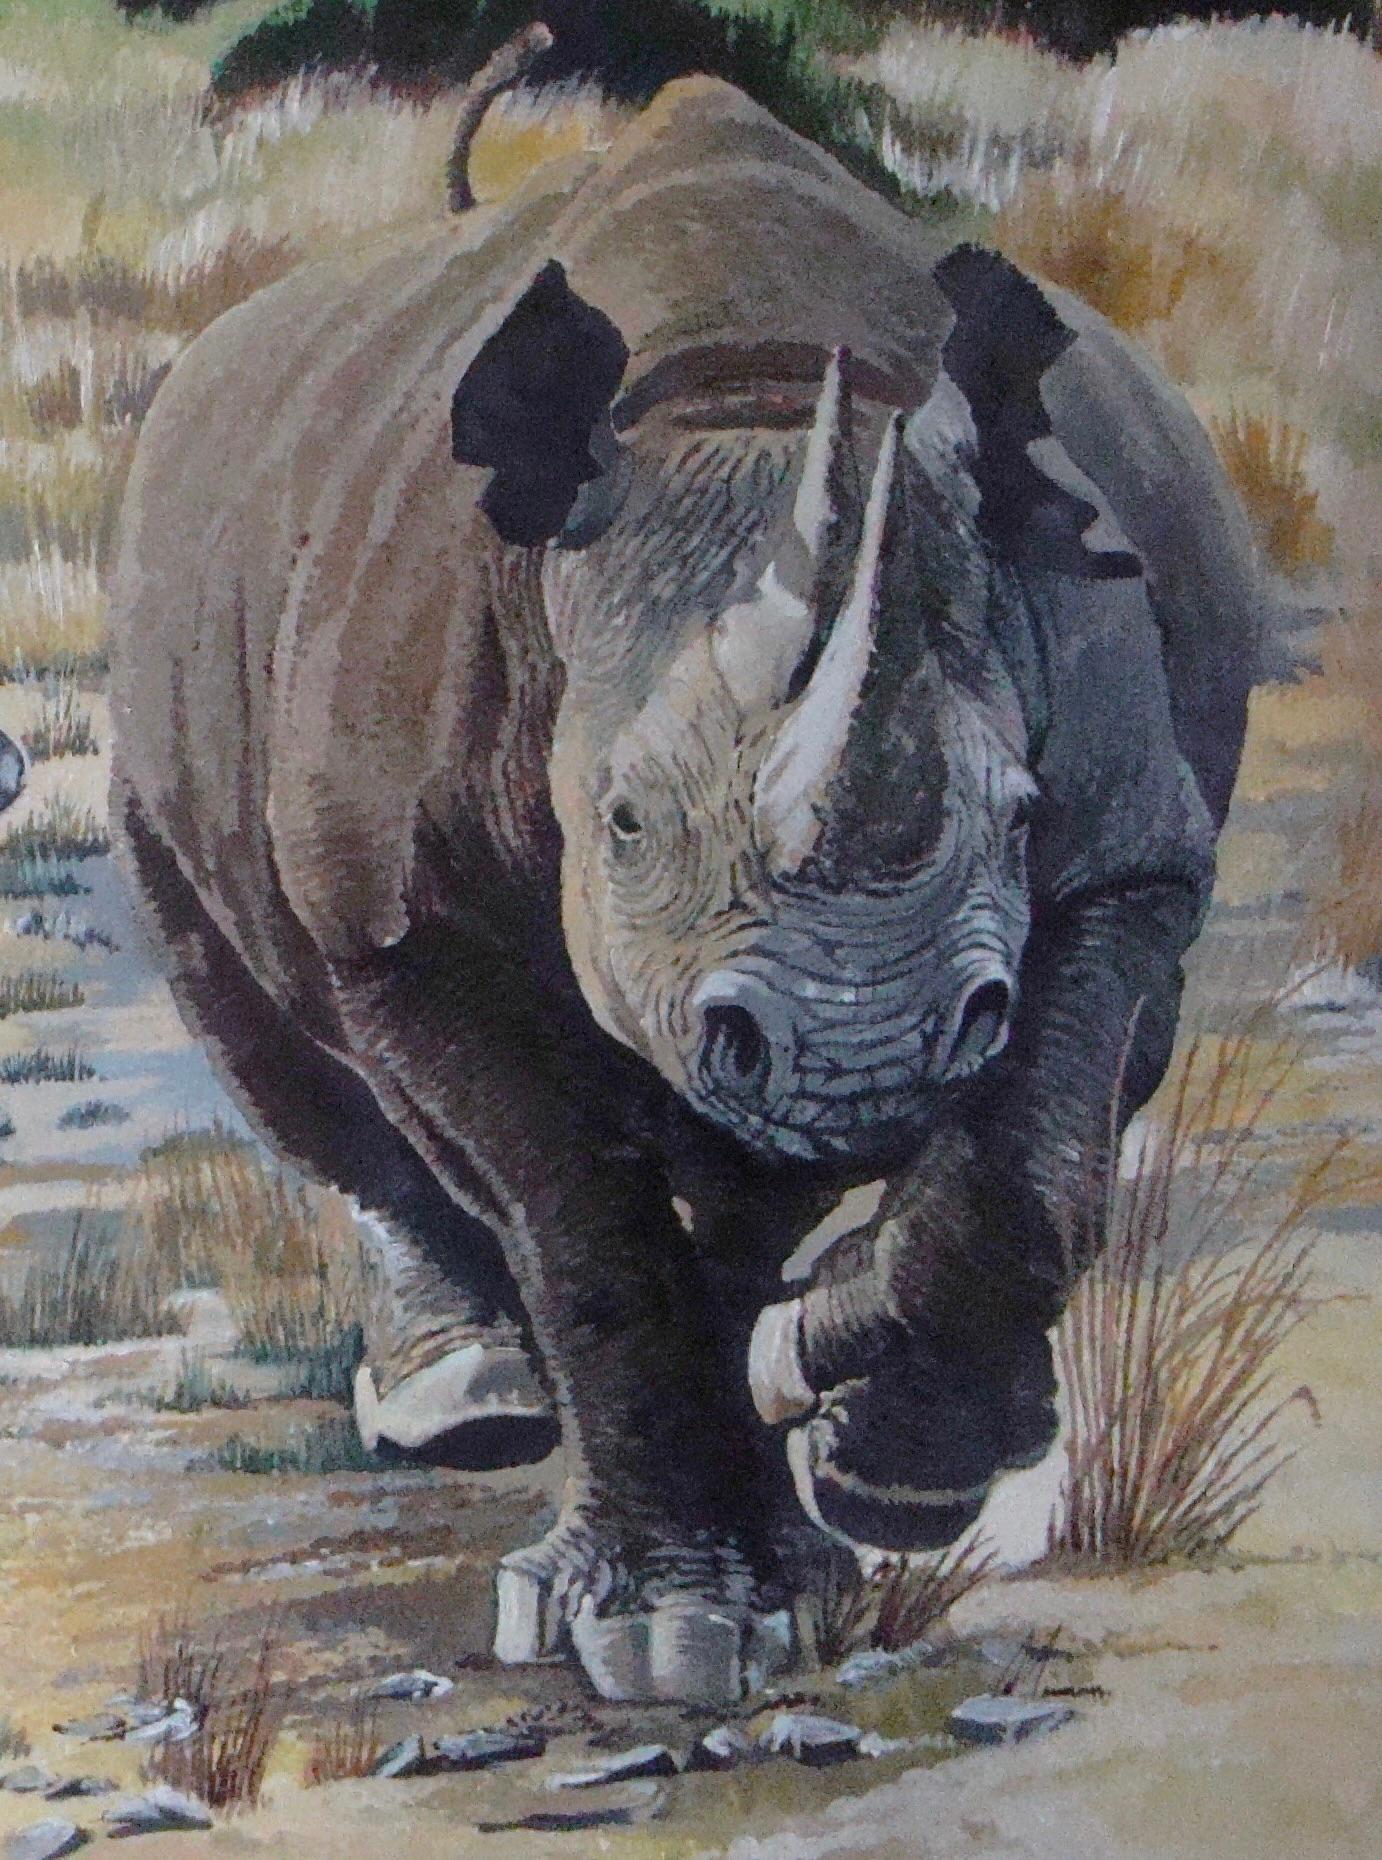 Crash of Rhino's, Animal Art, Safari Painting, Contemporary Realist Artwork - Gray Animal Painting by David Truman